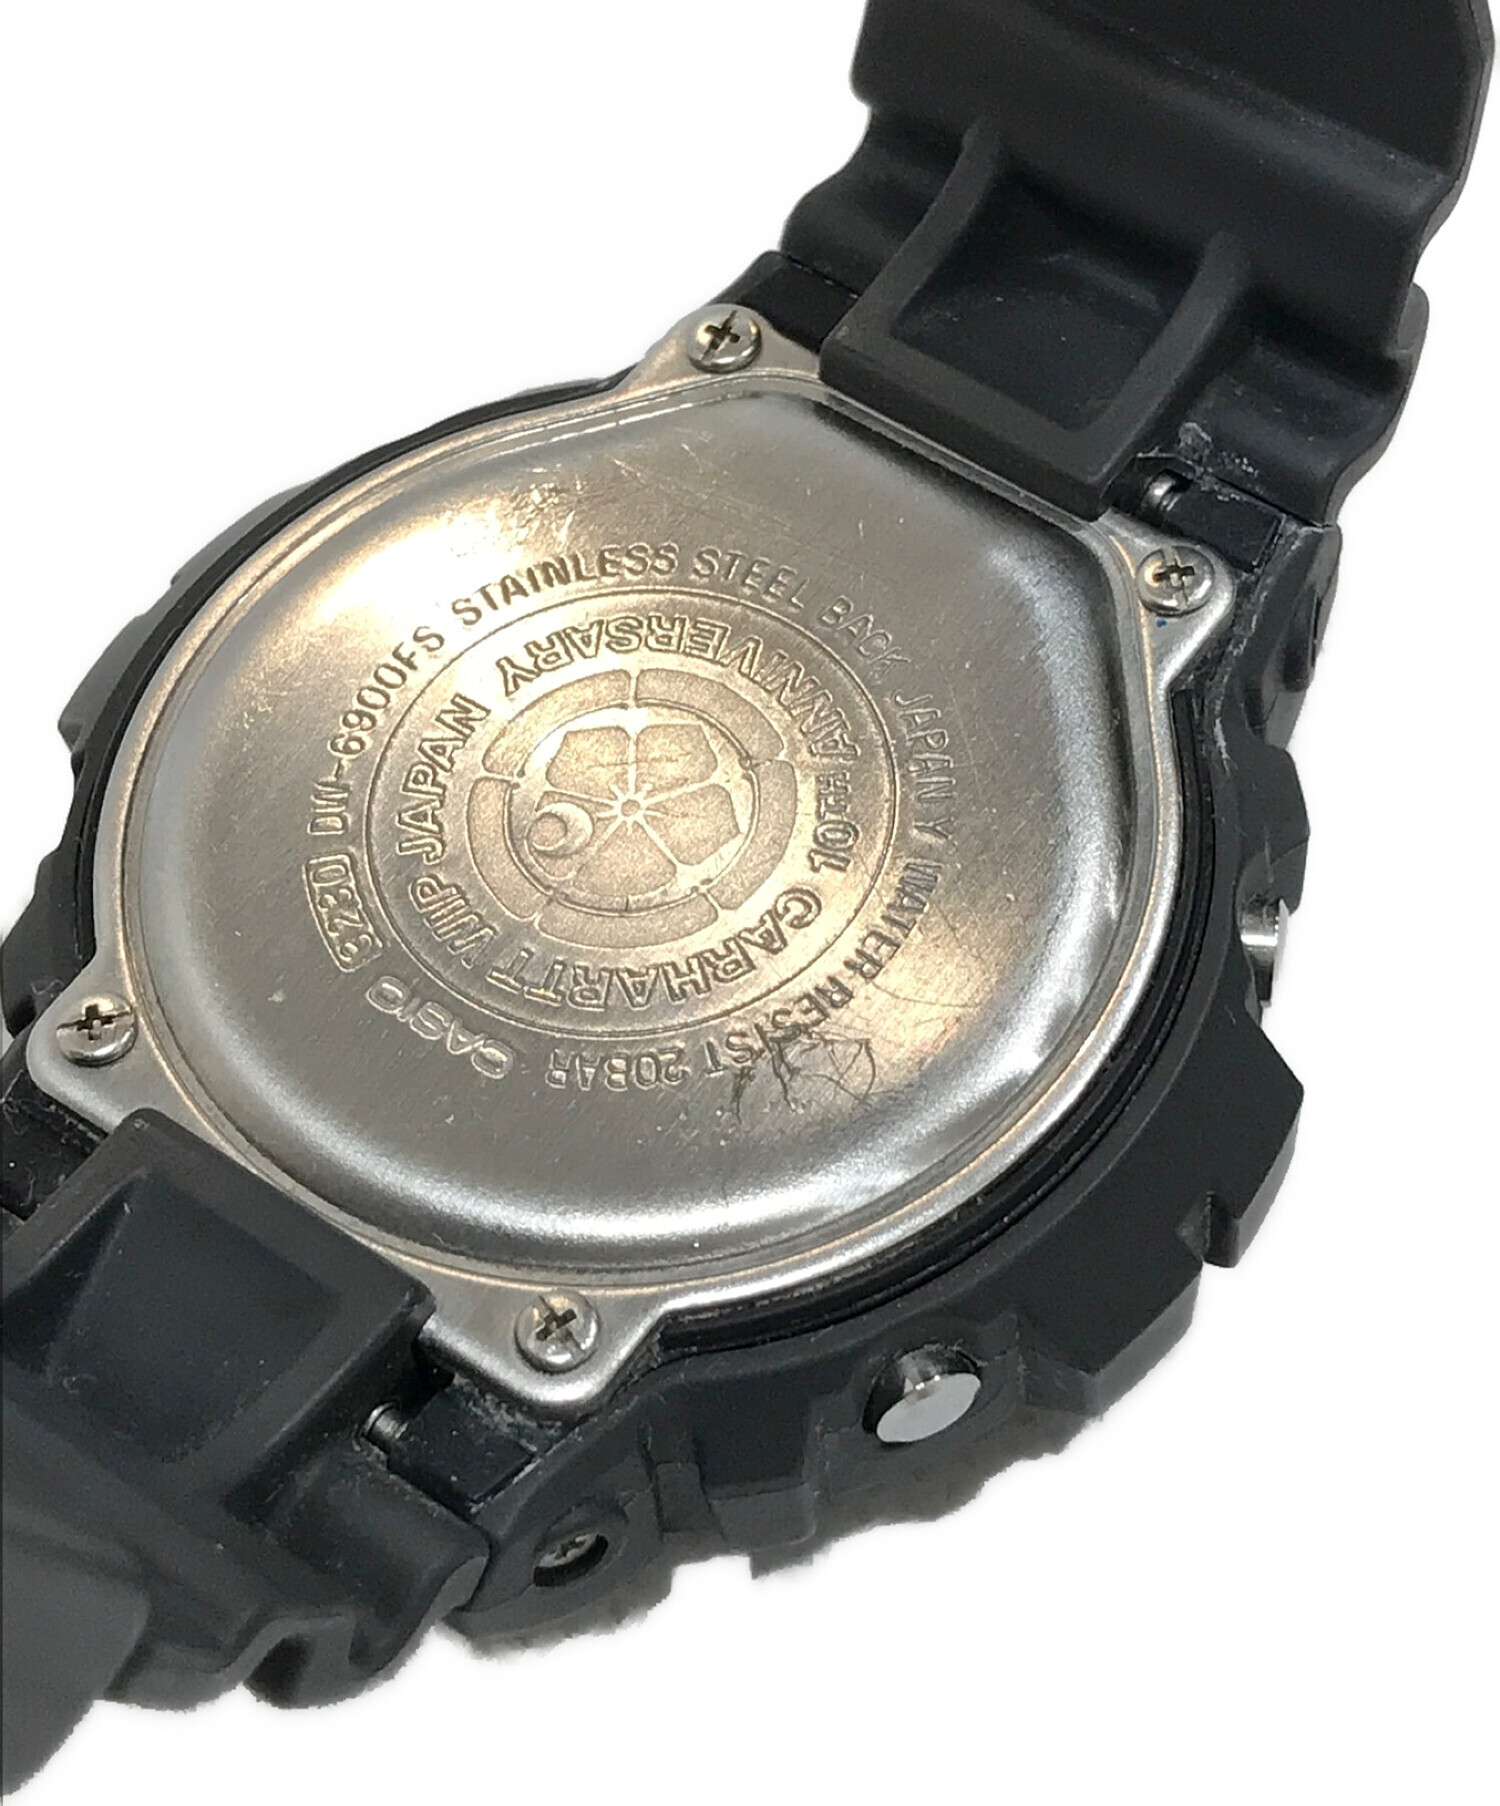 CASIO (カシオ) CARHARTT WIP (カーハートダブリューアイピー) 腕時計